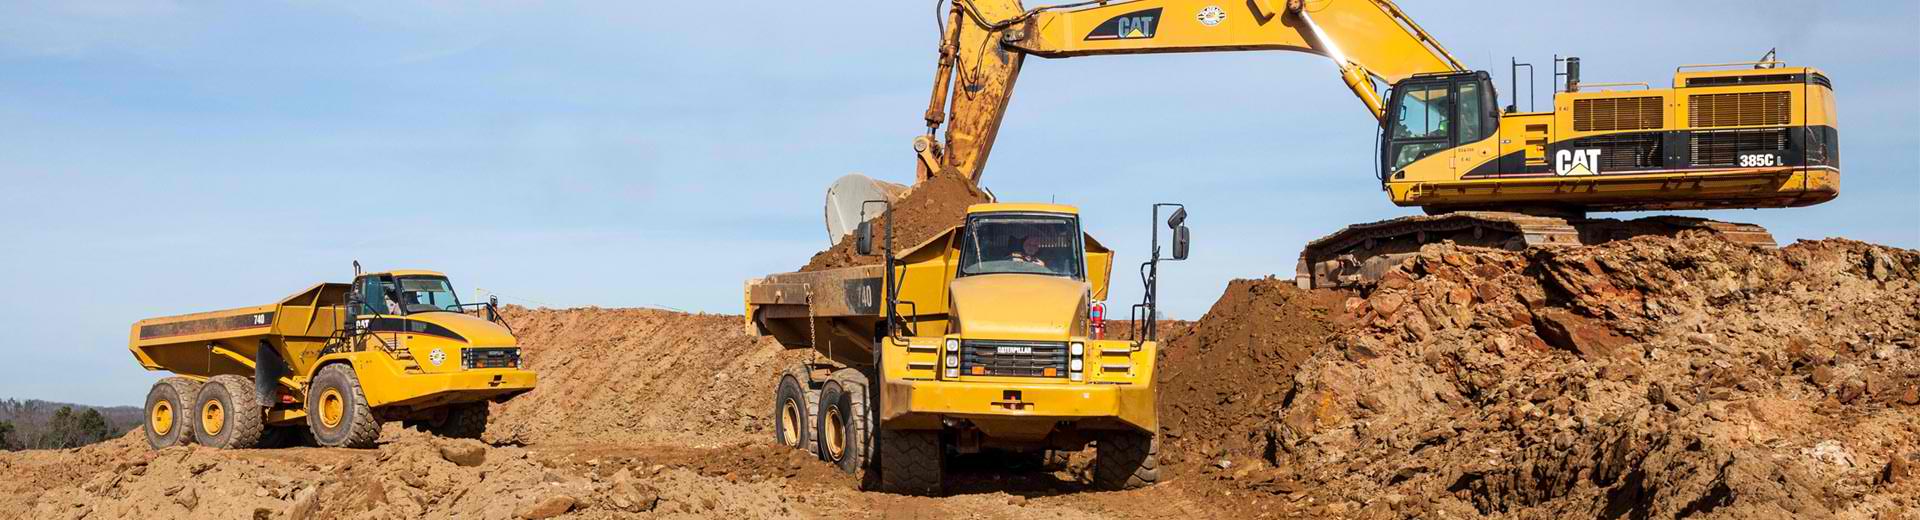 Leading Civil Contractor Machines Excavator Operator Australia